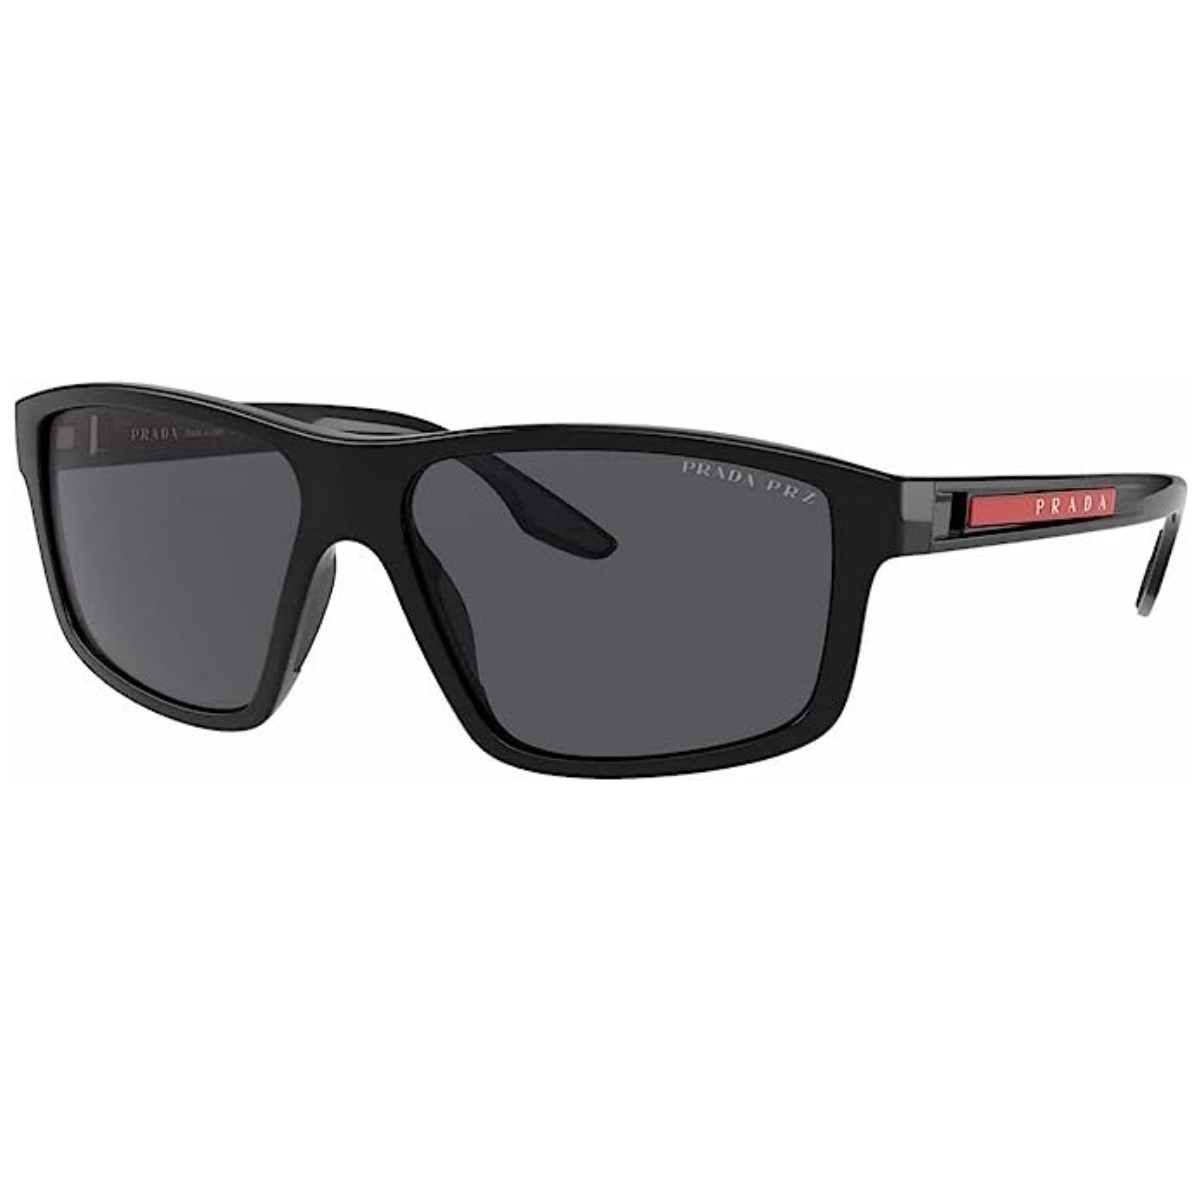 "Upgrade your look with Prada SPS 02XS - DG002G sunglasses for men, featuring a sleek rectangular design and dark grey polarized lenses at Optorium."